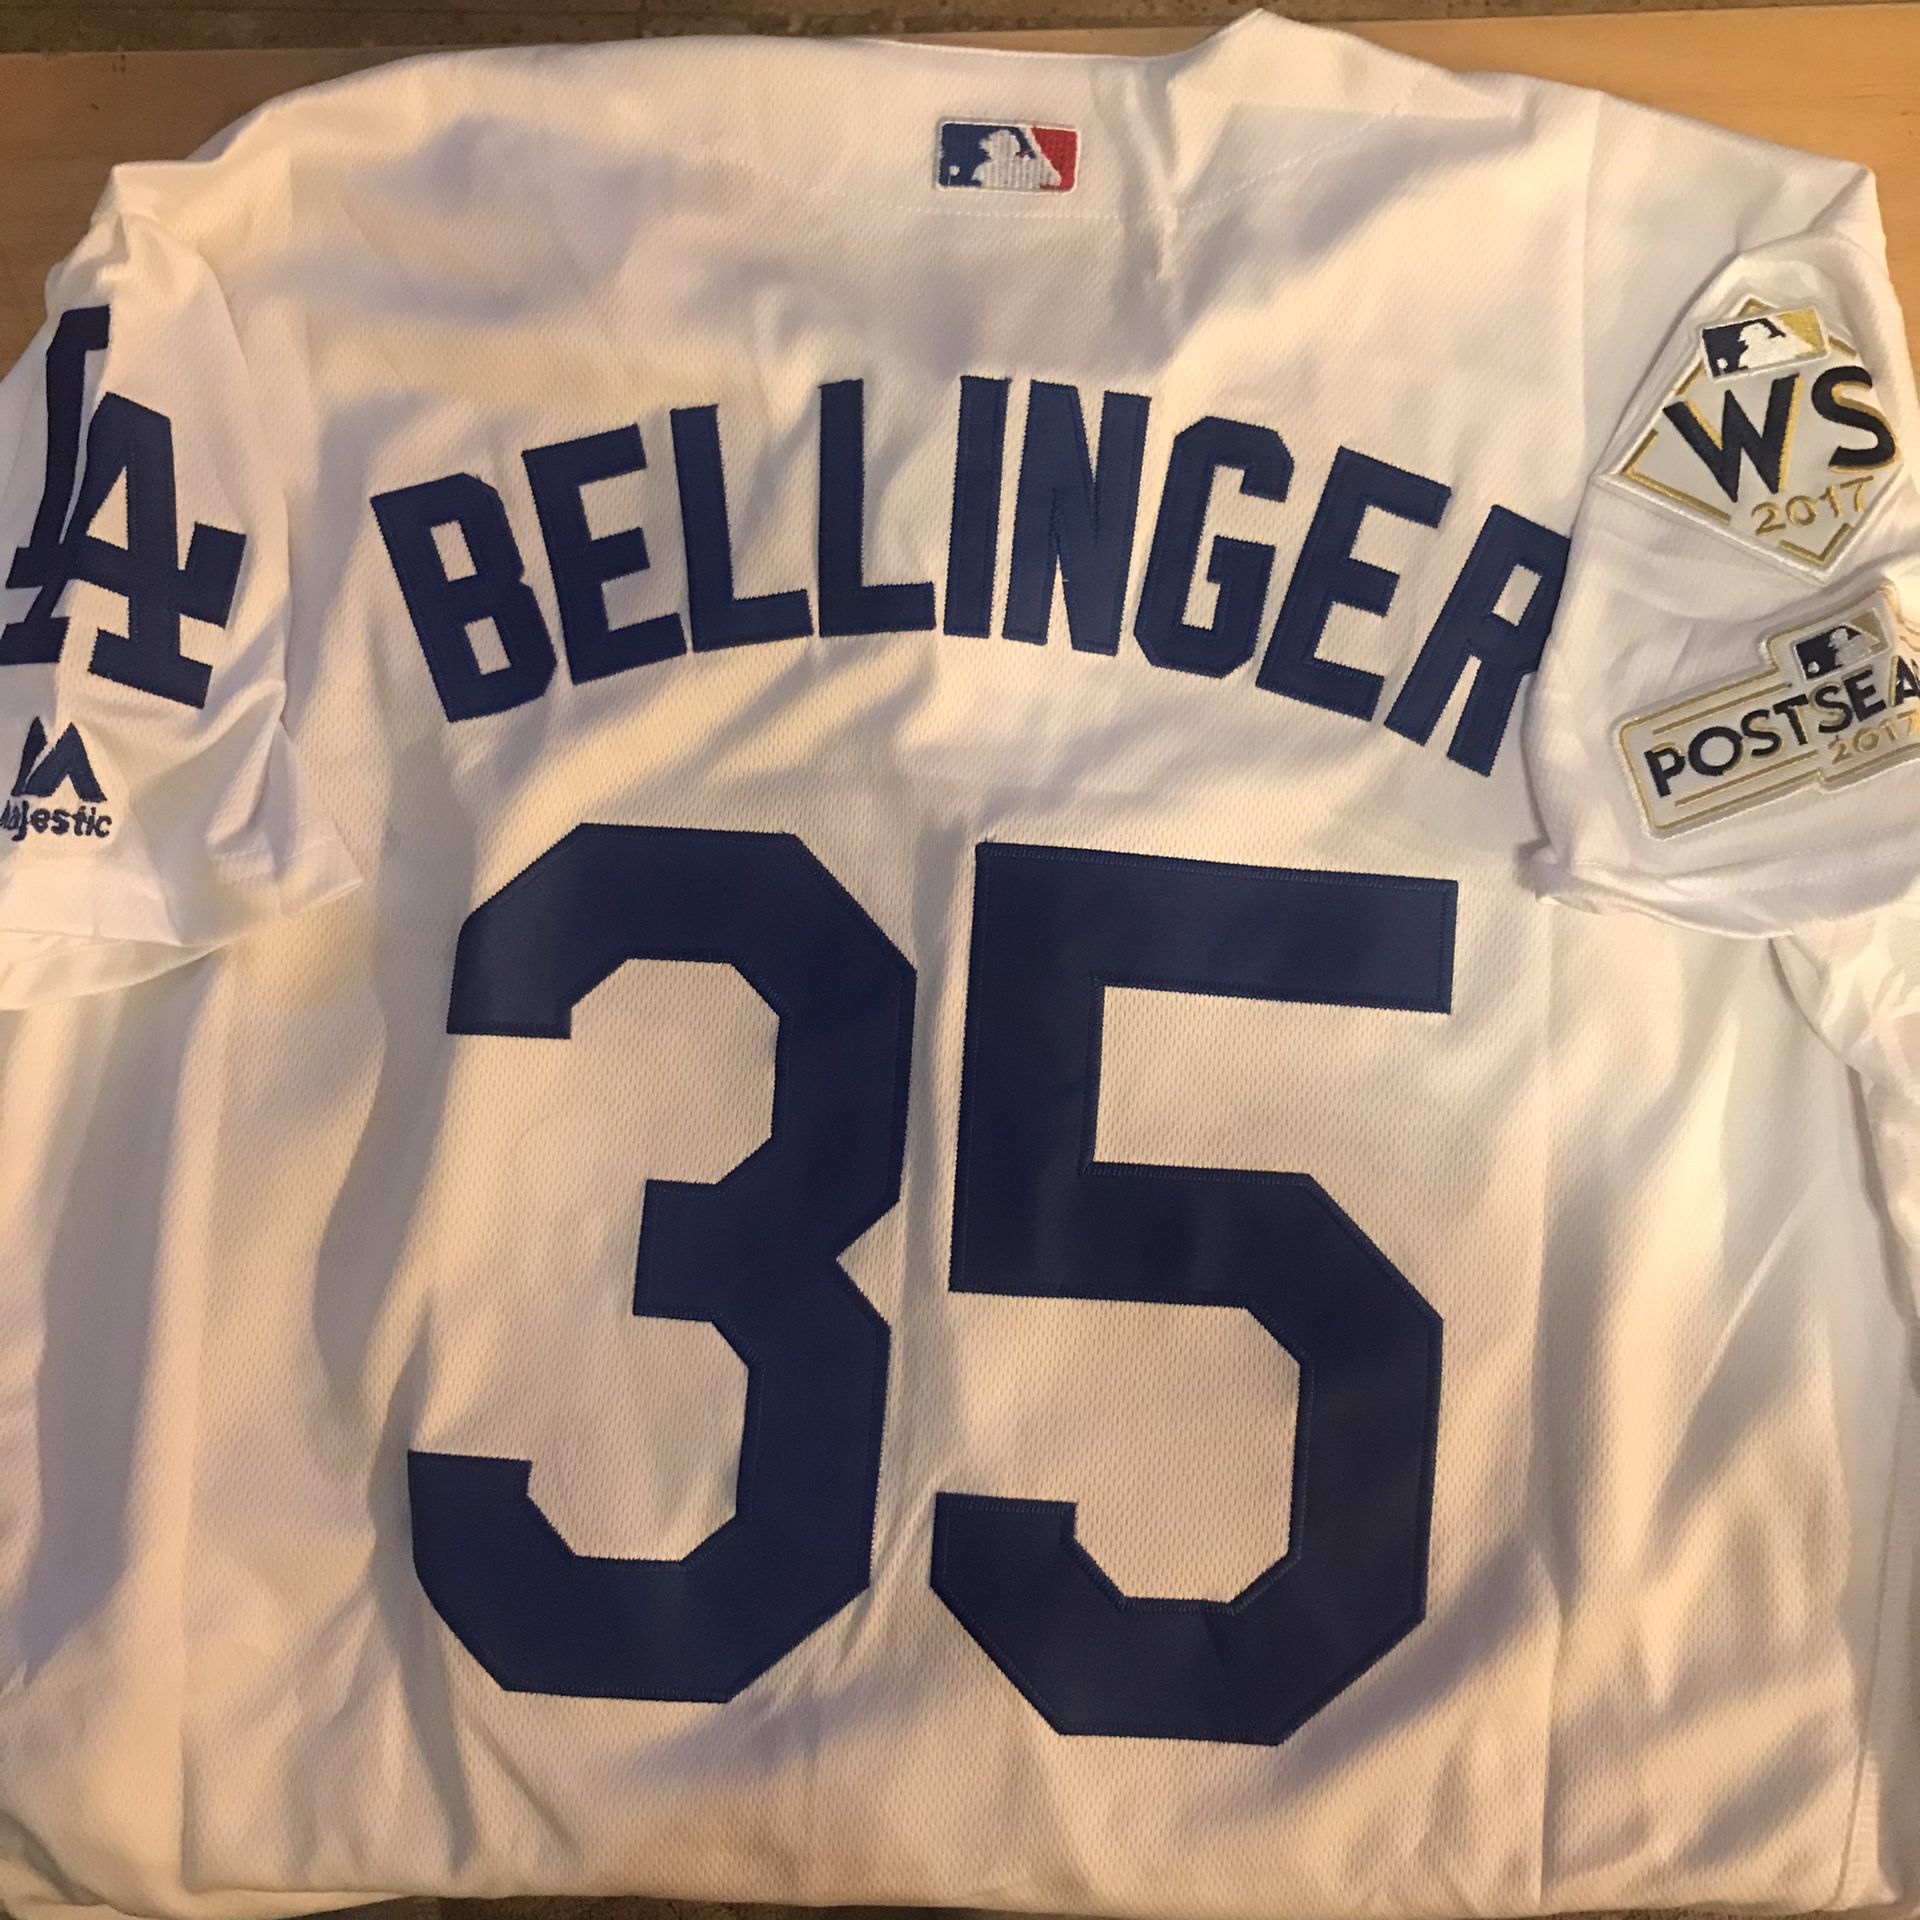 LA Dodgers Bellinger Baseball Jersey WS